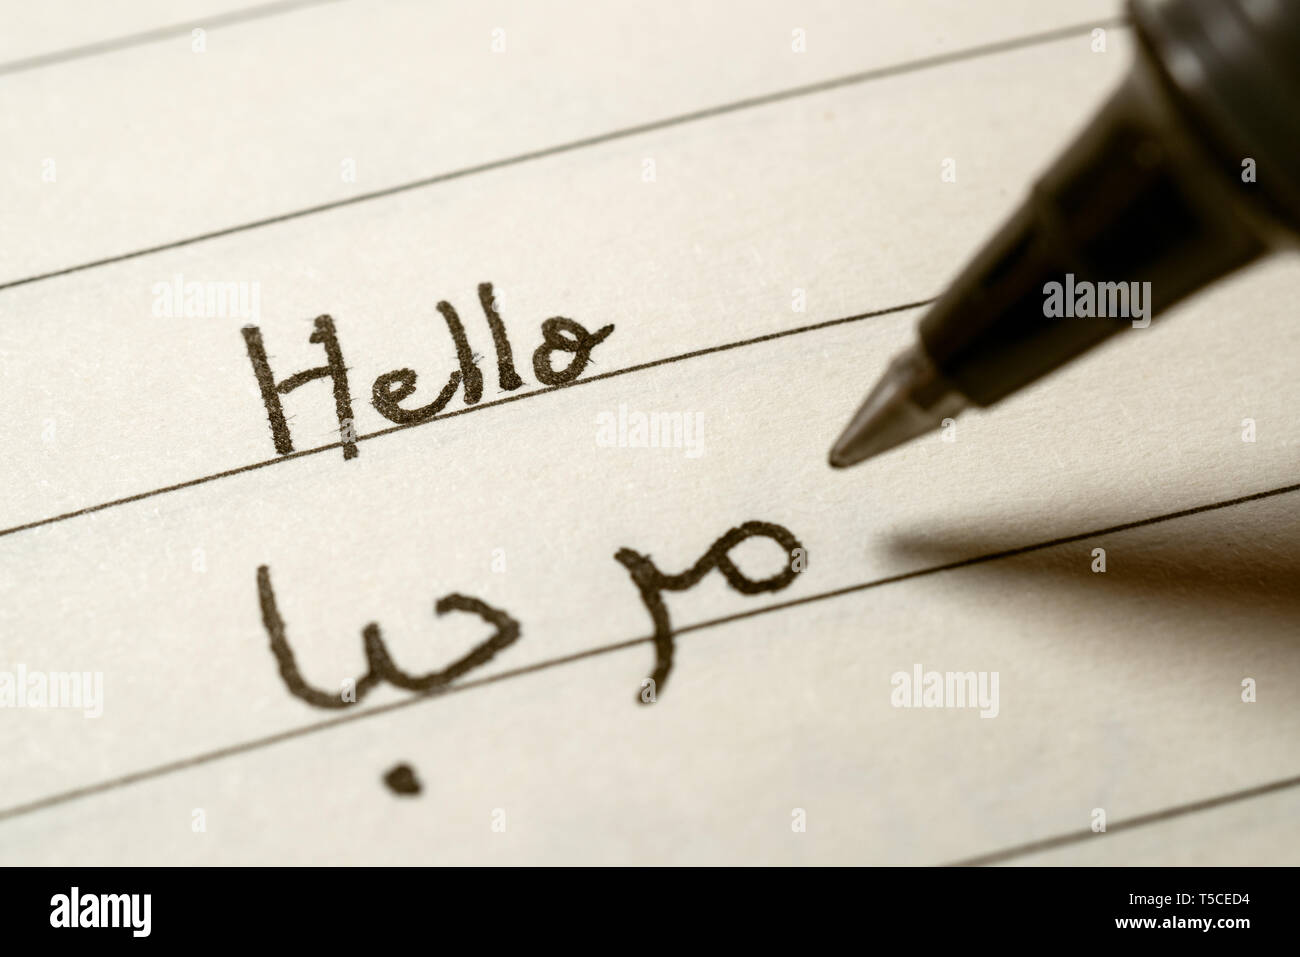 Beginner Arabic language learner writing Hello word in abjad Arabic alphabet on a notebook close-up shot Stock Photo